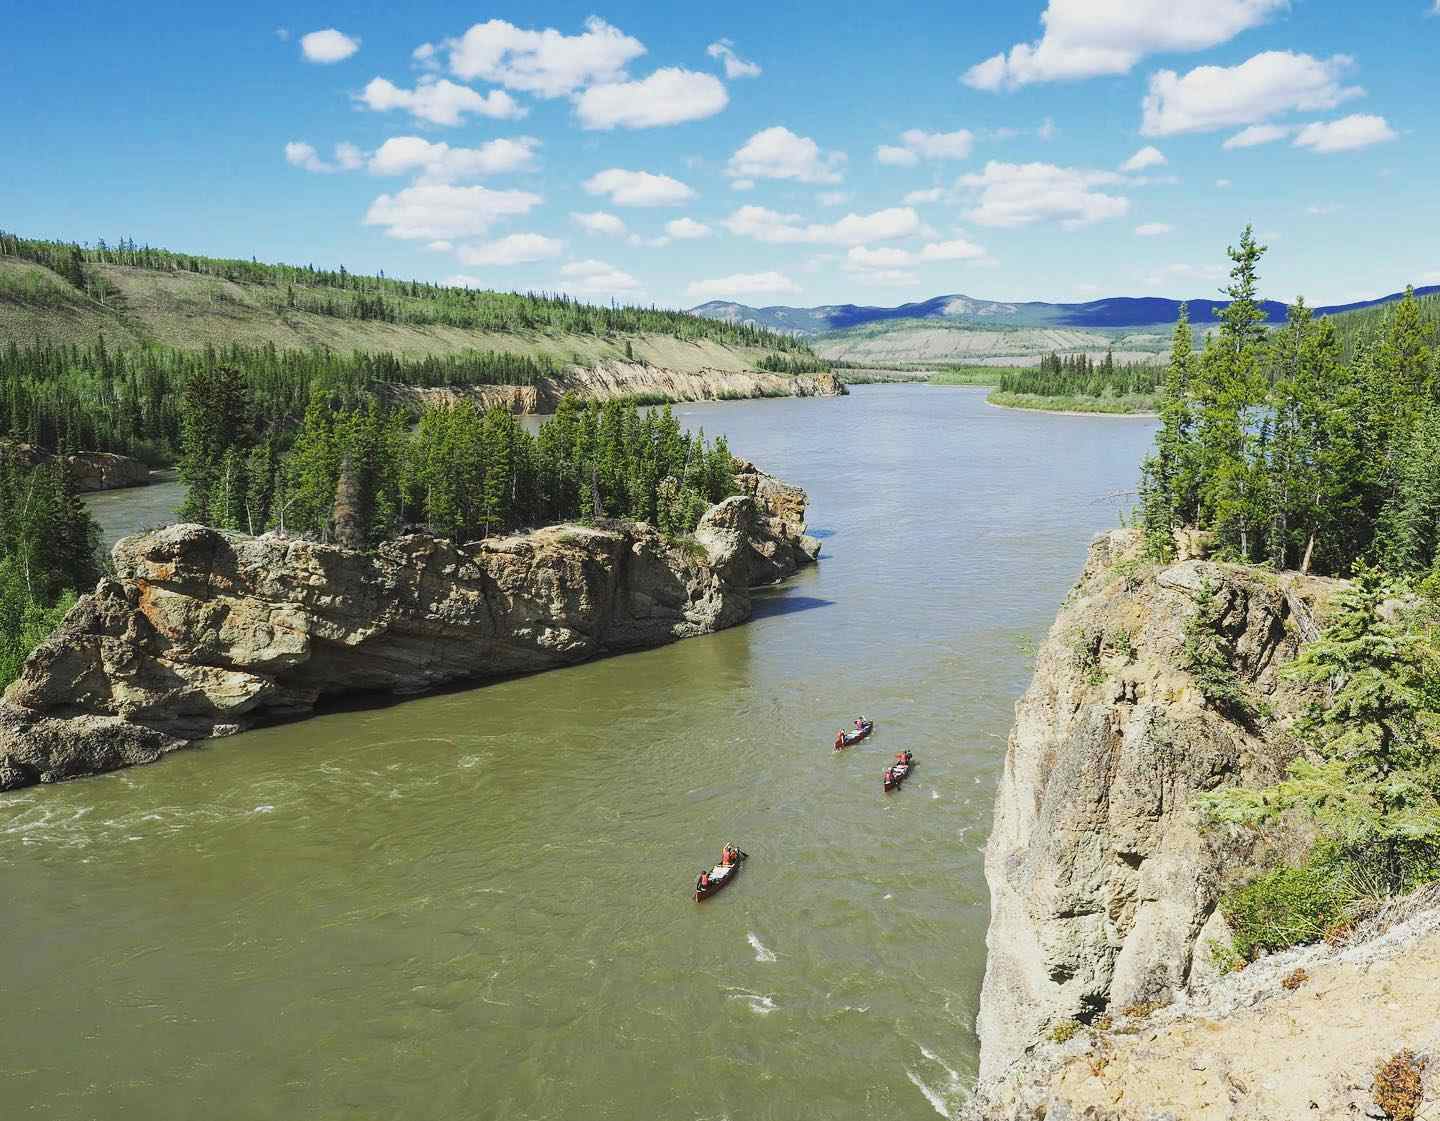 Yukon River Canada Canoeing
Host image: Ruby Range Adventures